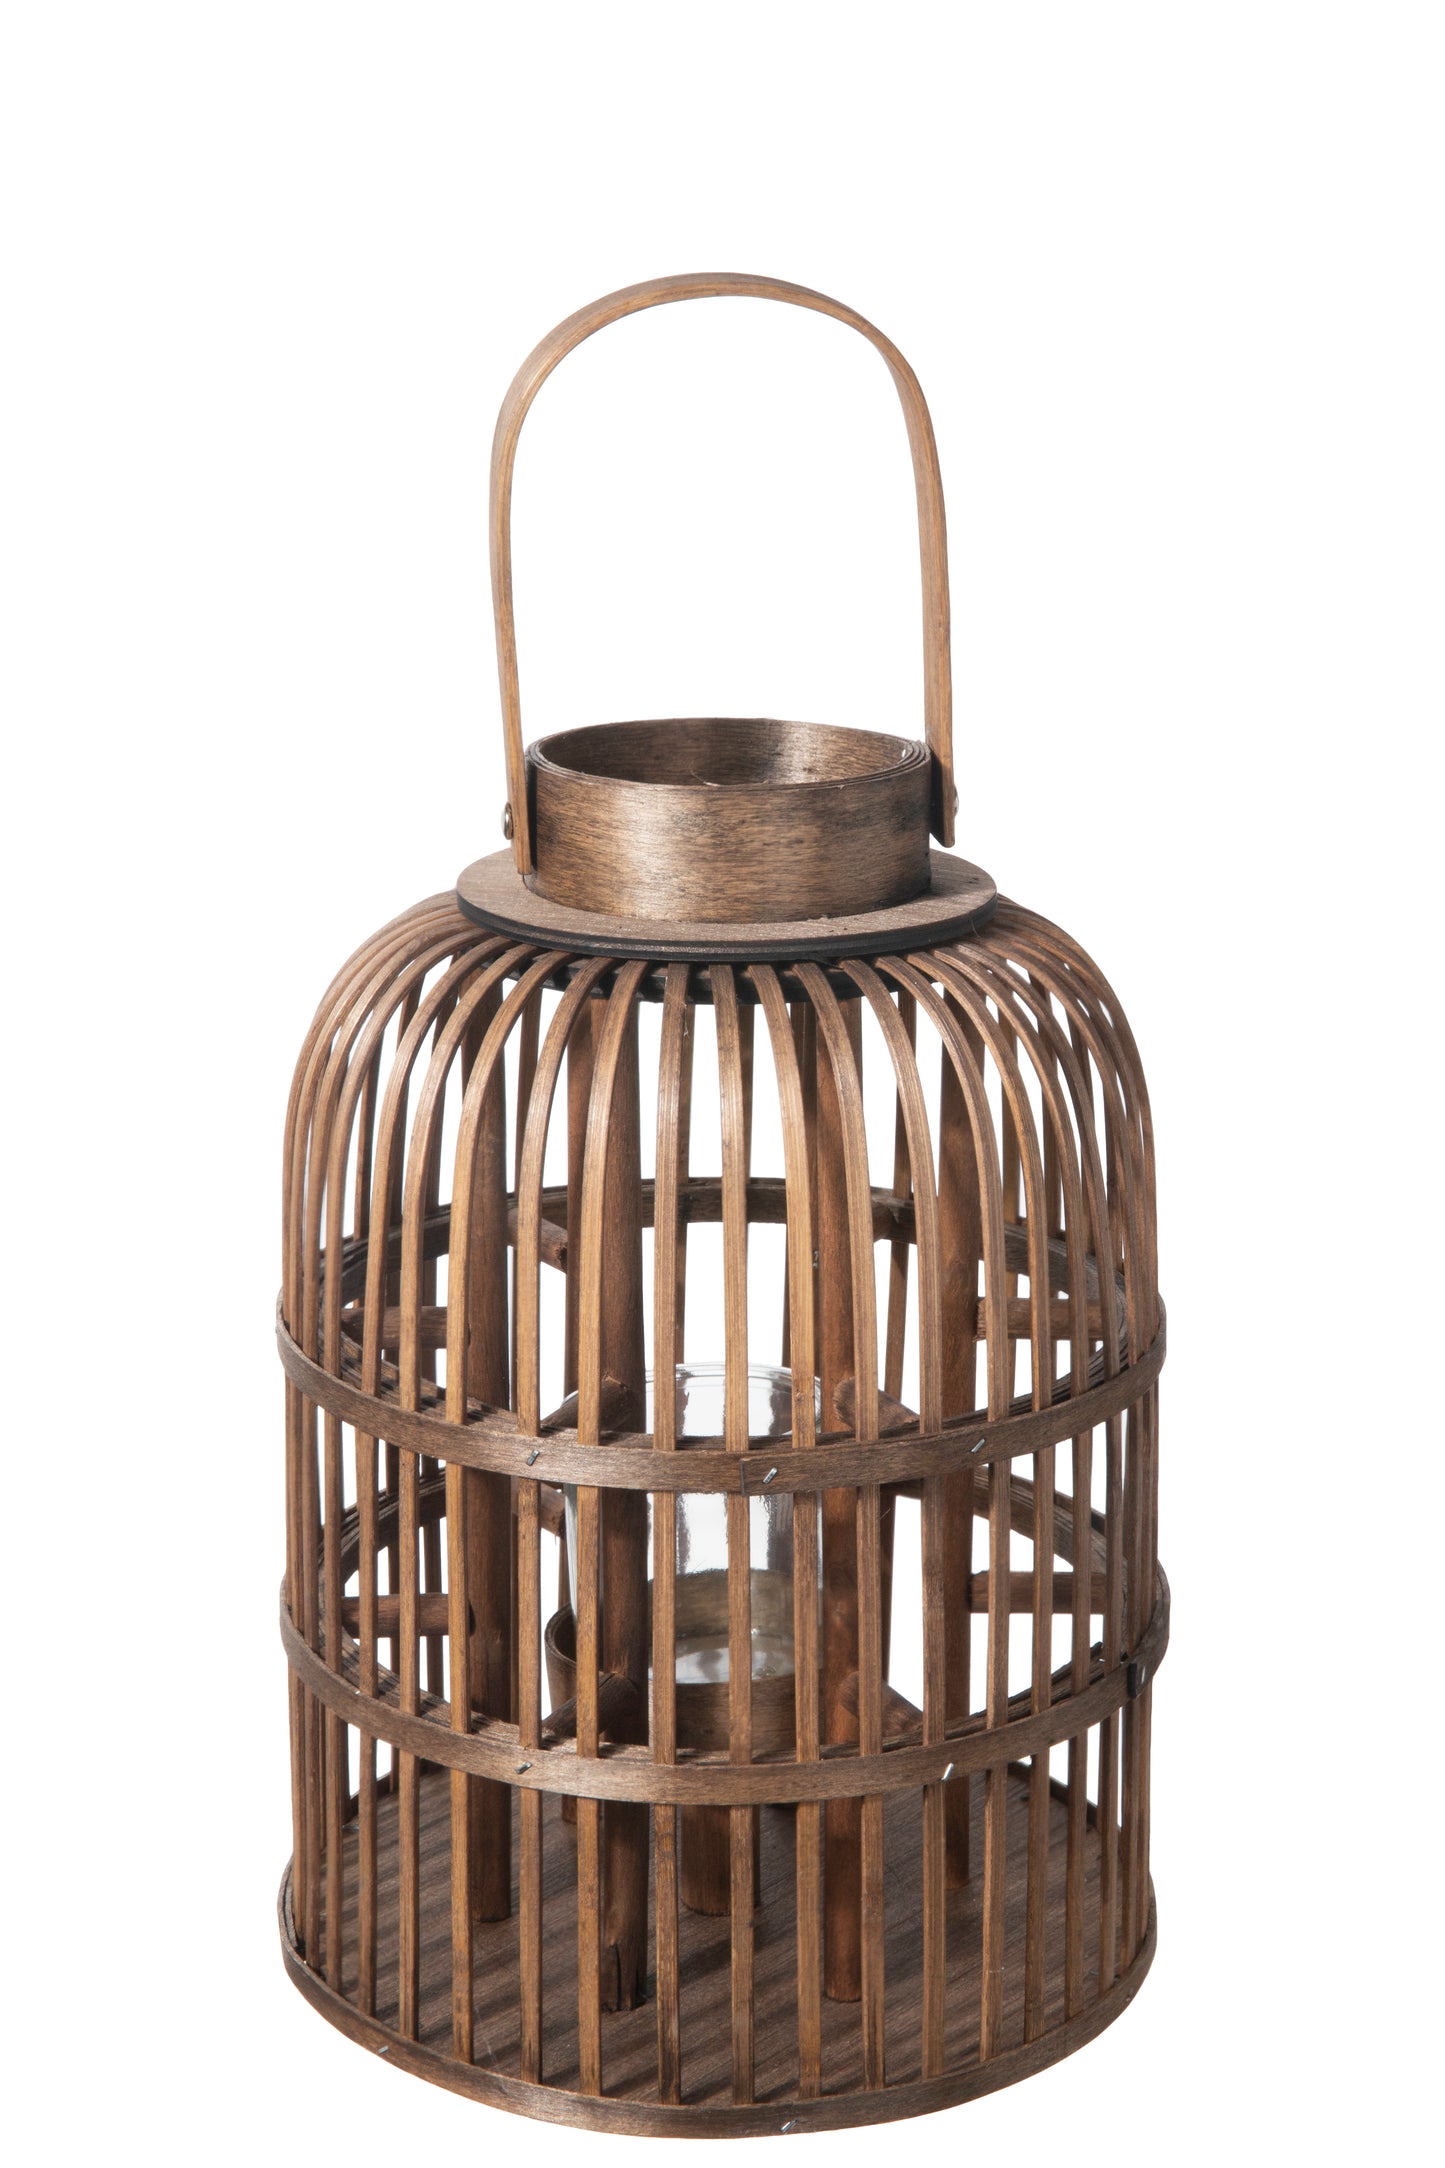 Bamboo Round Lantern with Top Handle, Vertical Lattice Design